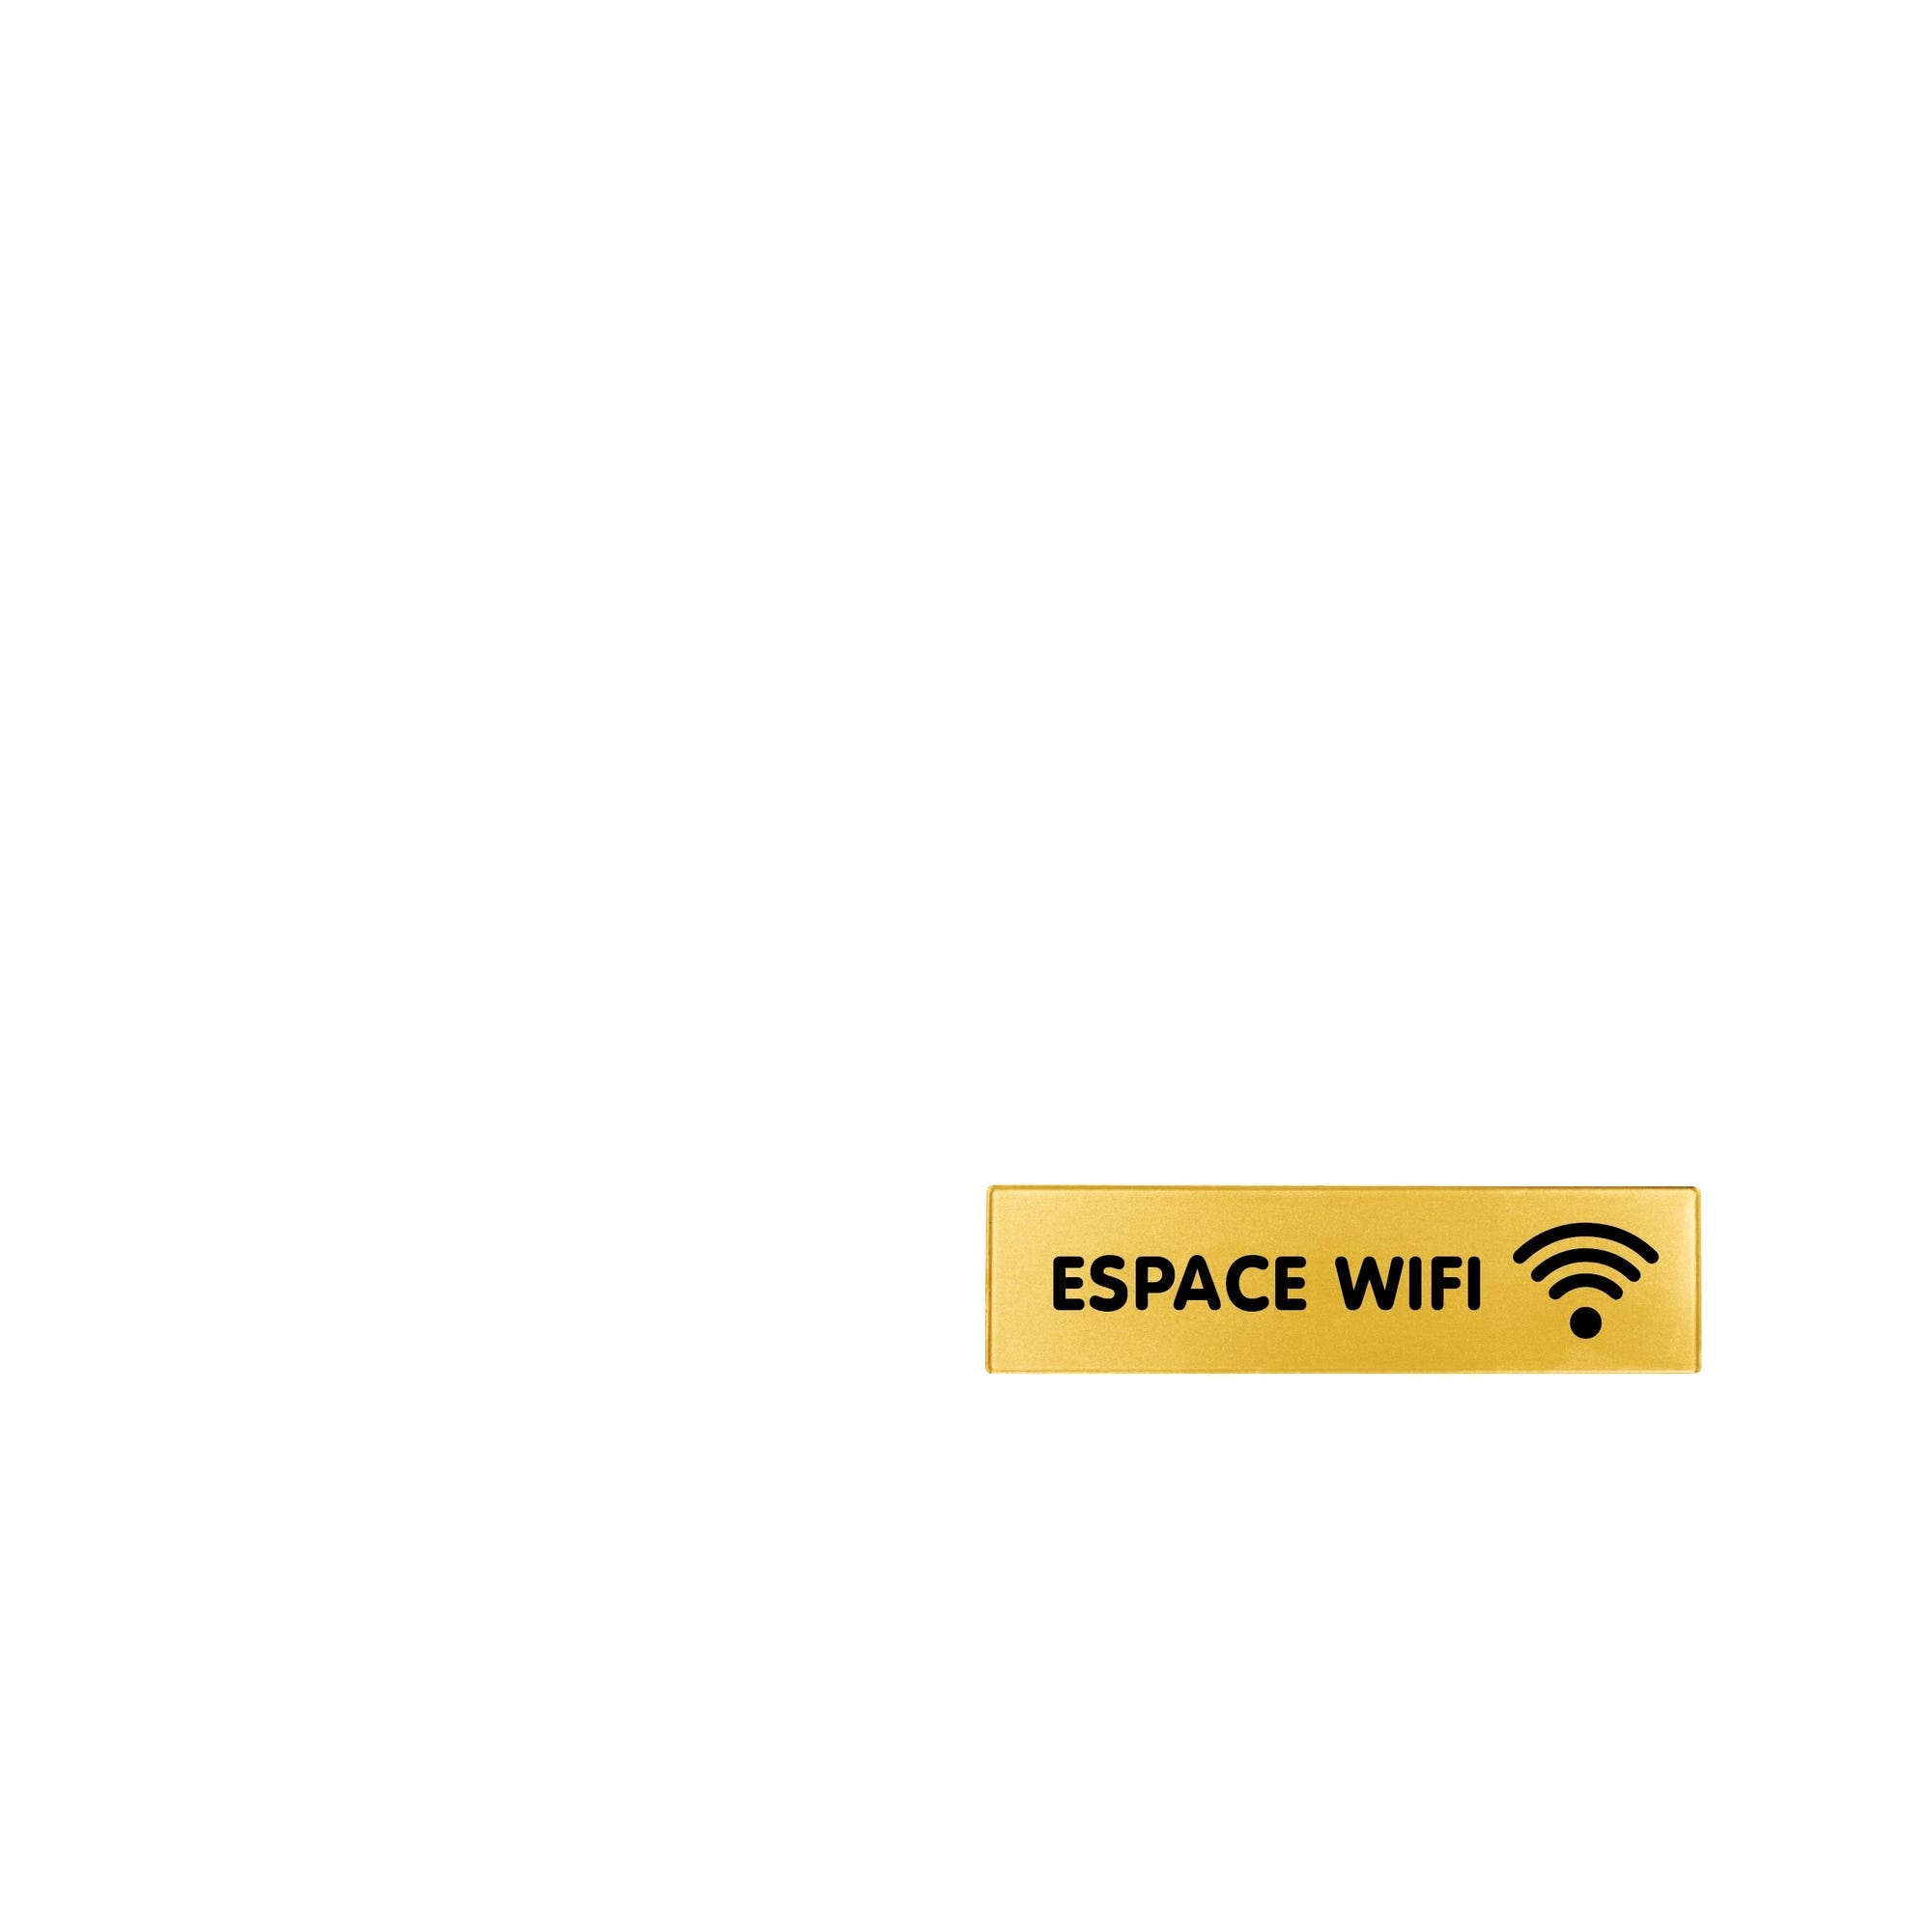 Plaquette Espace Wifi - Plexiglas or 170x45mm - 4491370 0